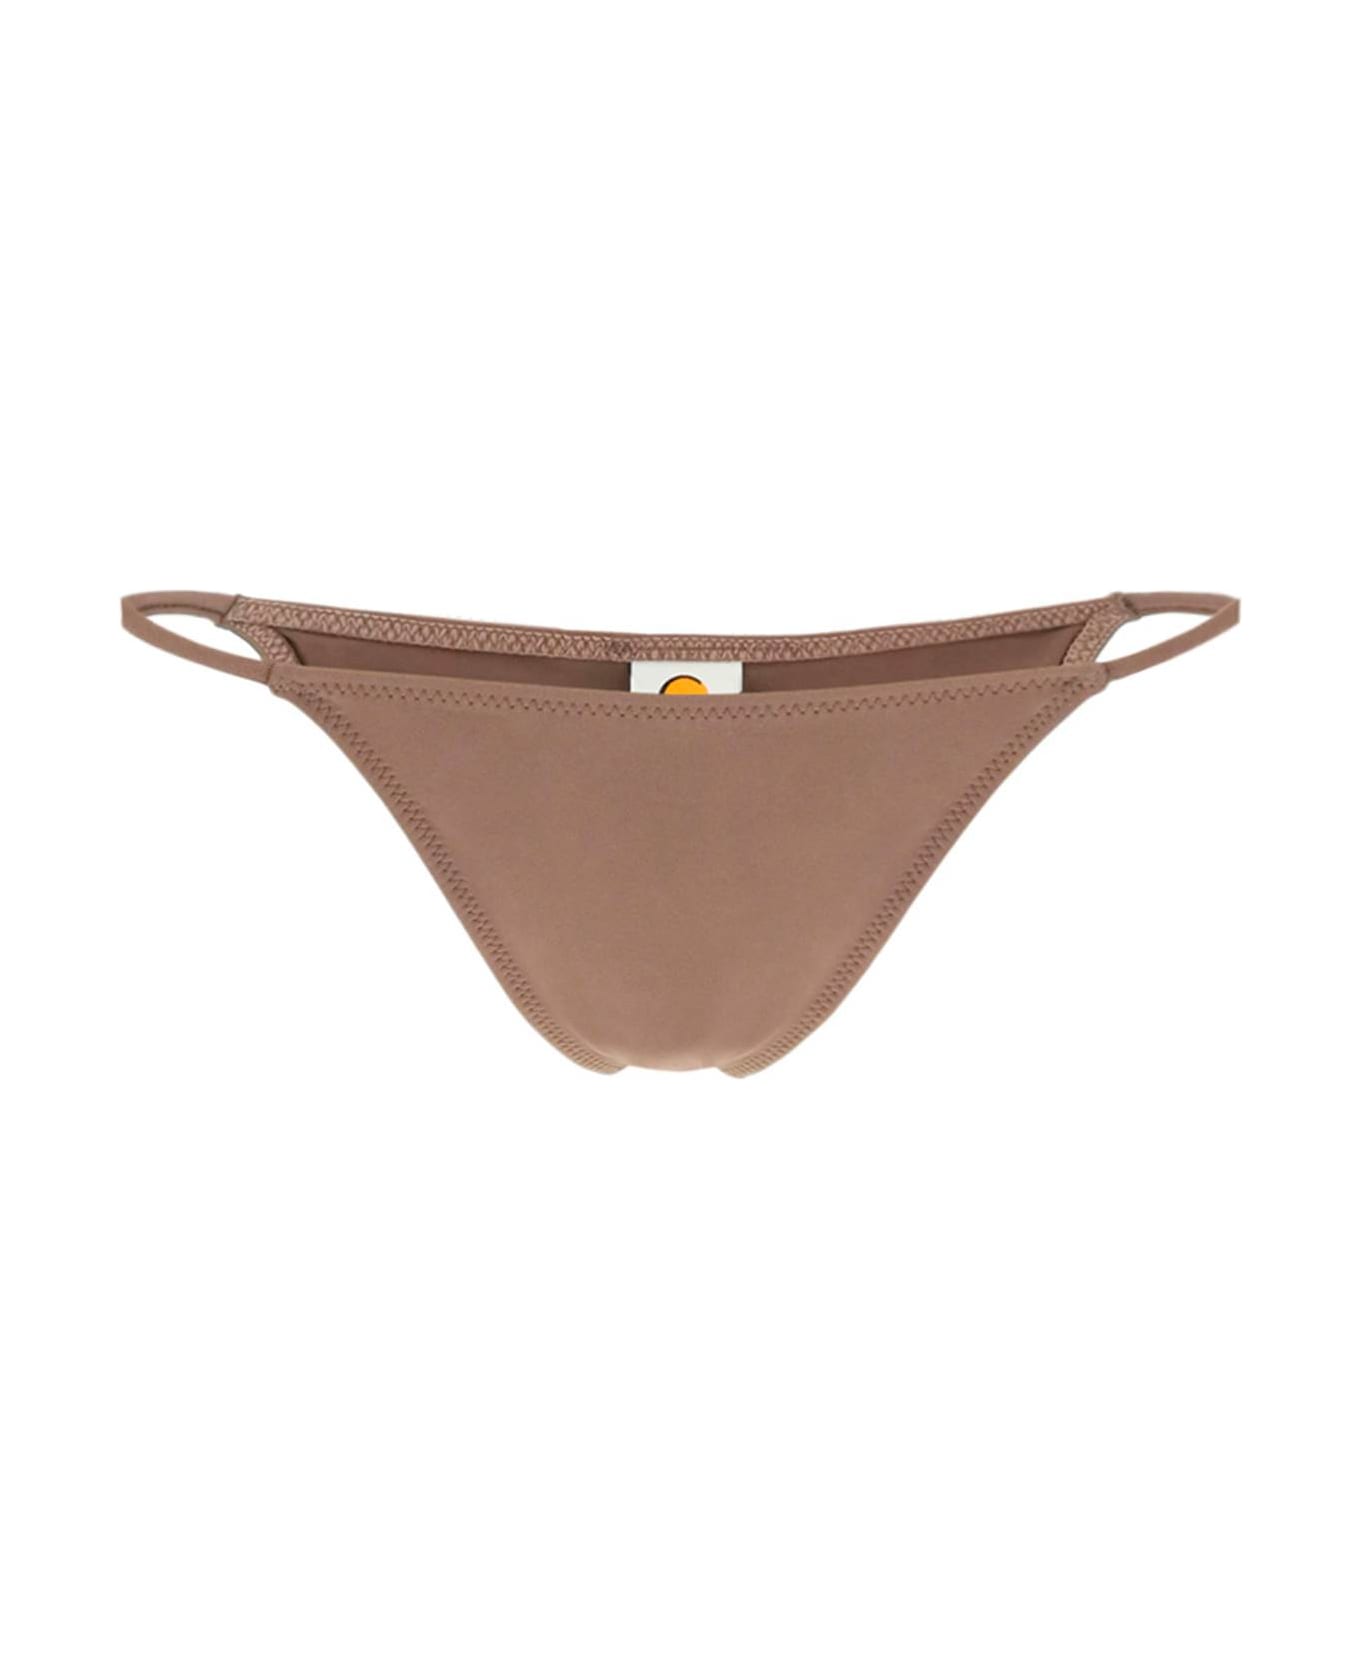 Stretch cotton poplin shirt with Shiny Tab Rio Bikini Bottom - DRIFTWOOD (Brown)